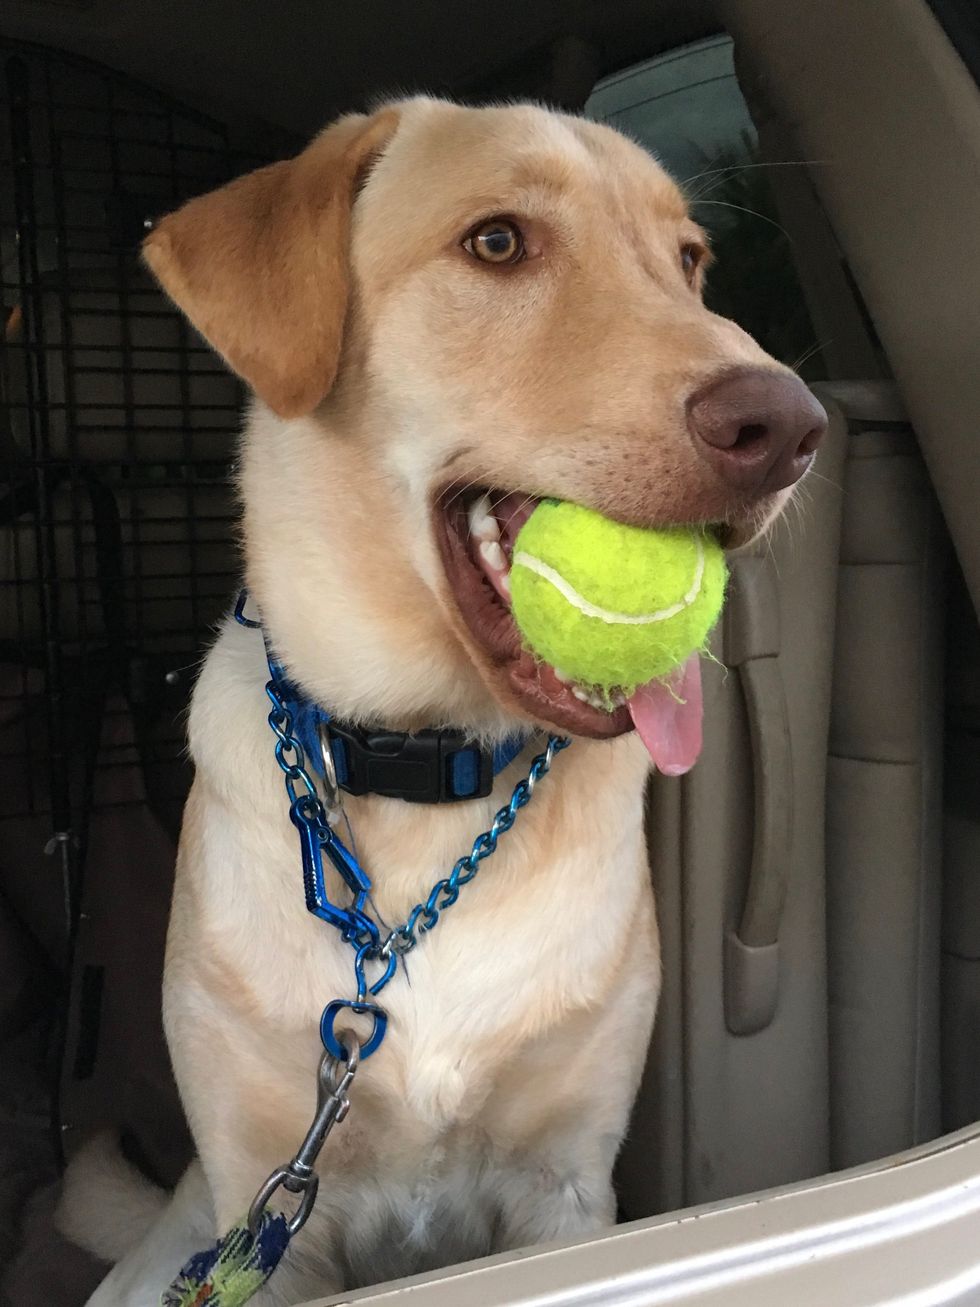 My Labrador Retriever with a tennis ball in his mouth